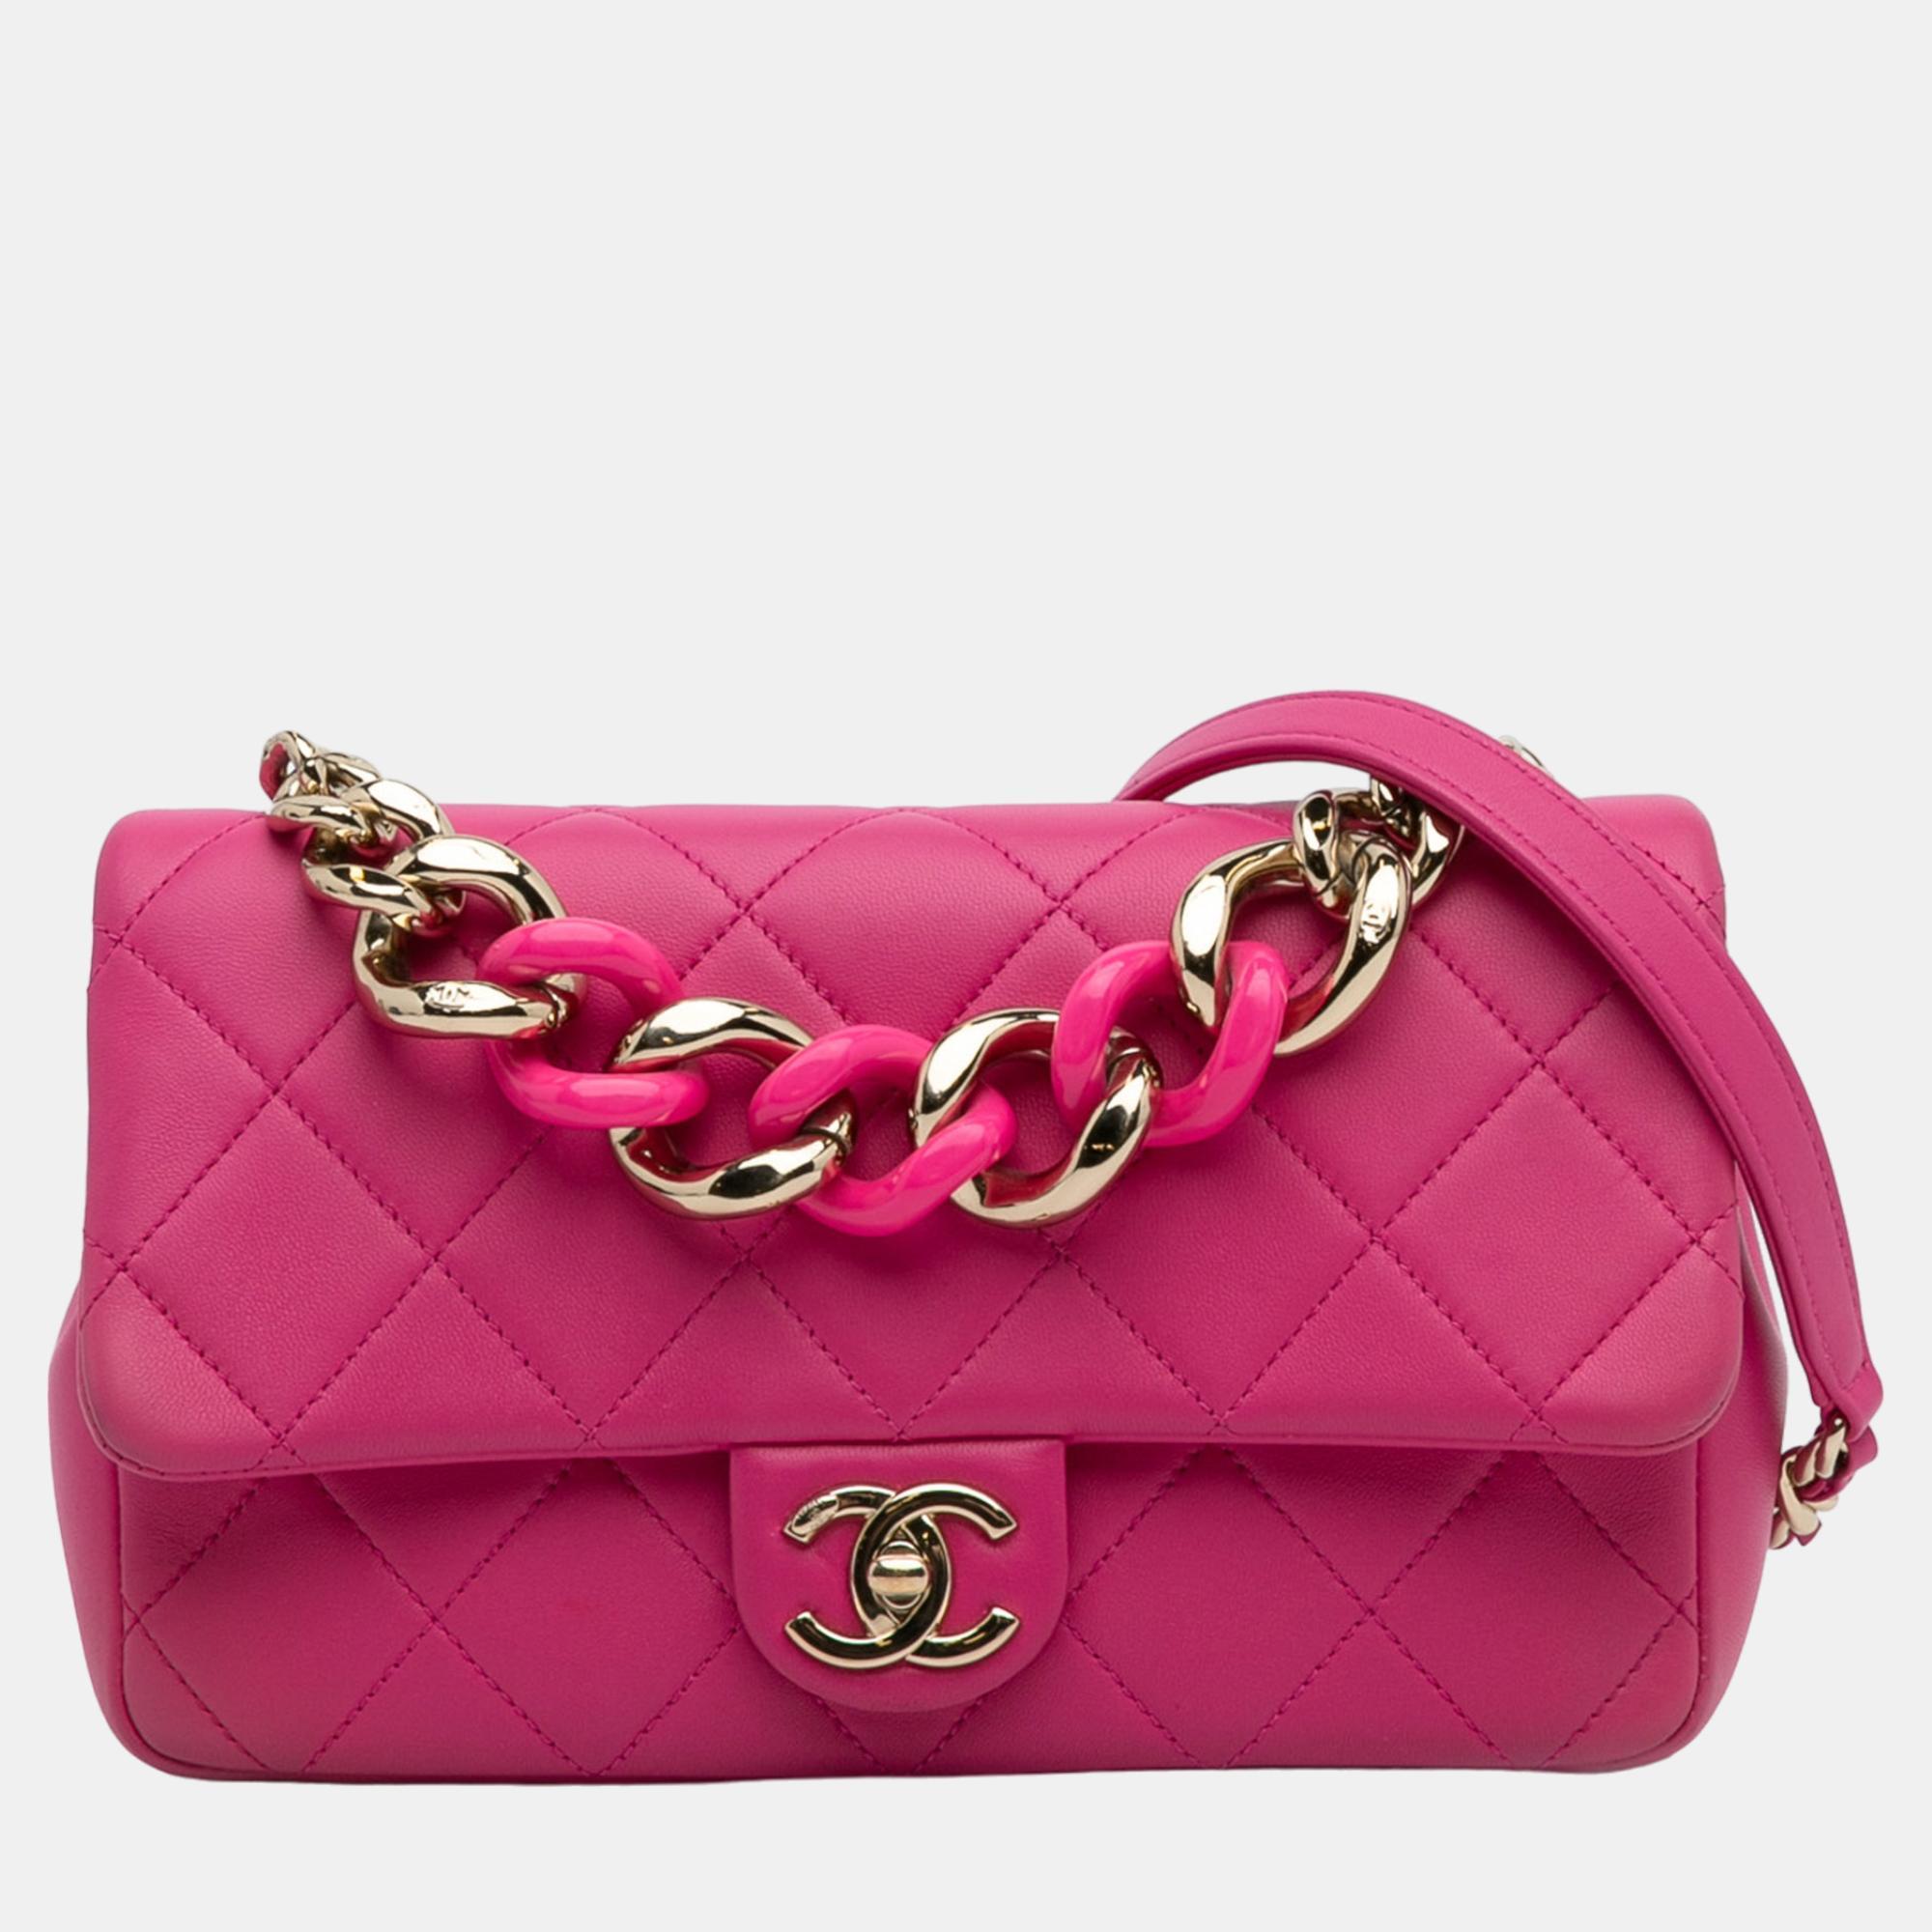 Chanel pink small lambskin elegant chain single flap